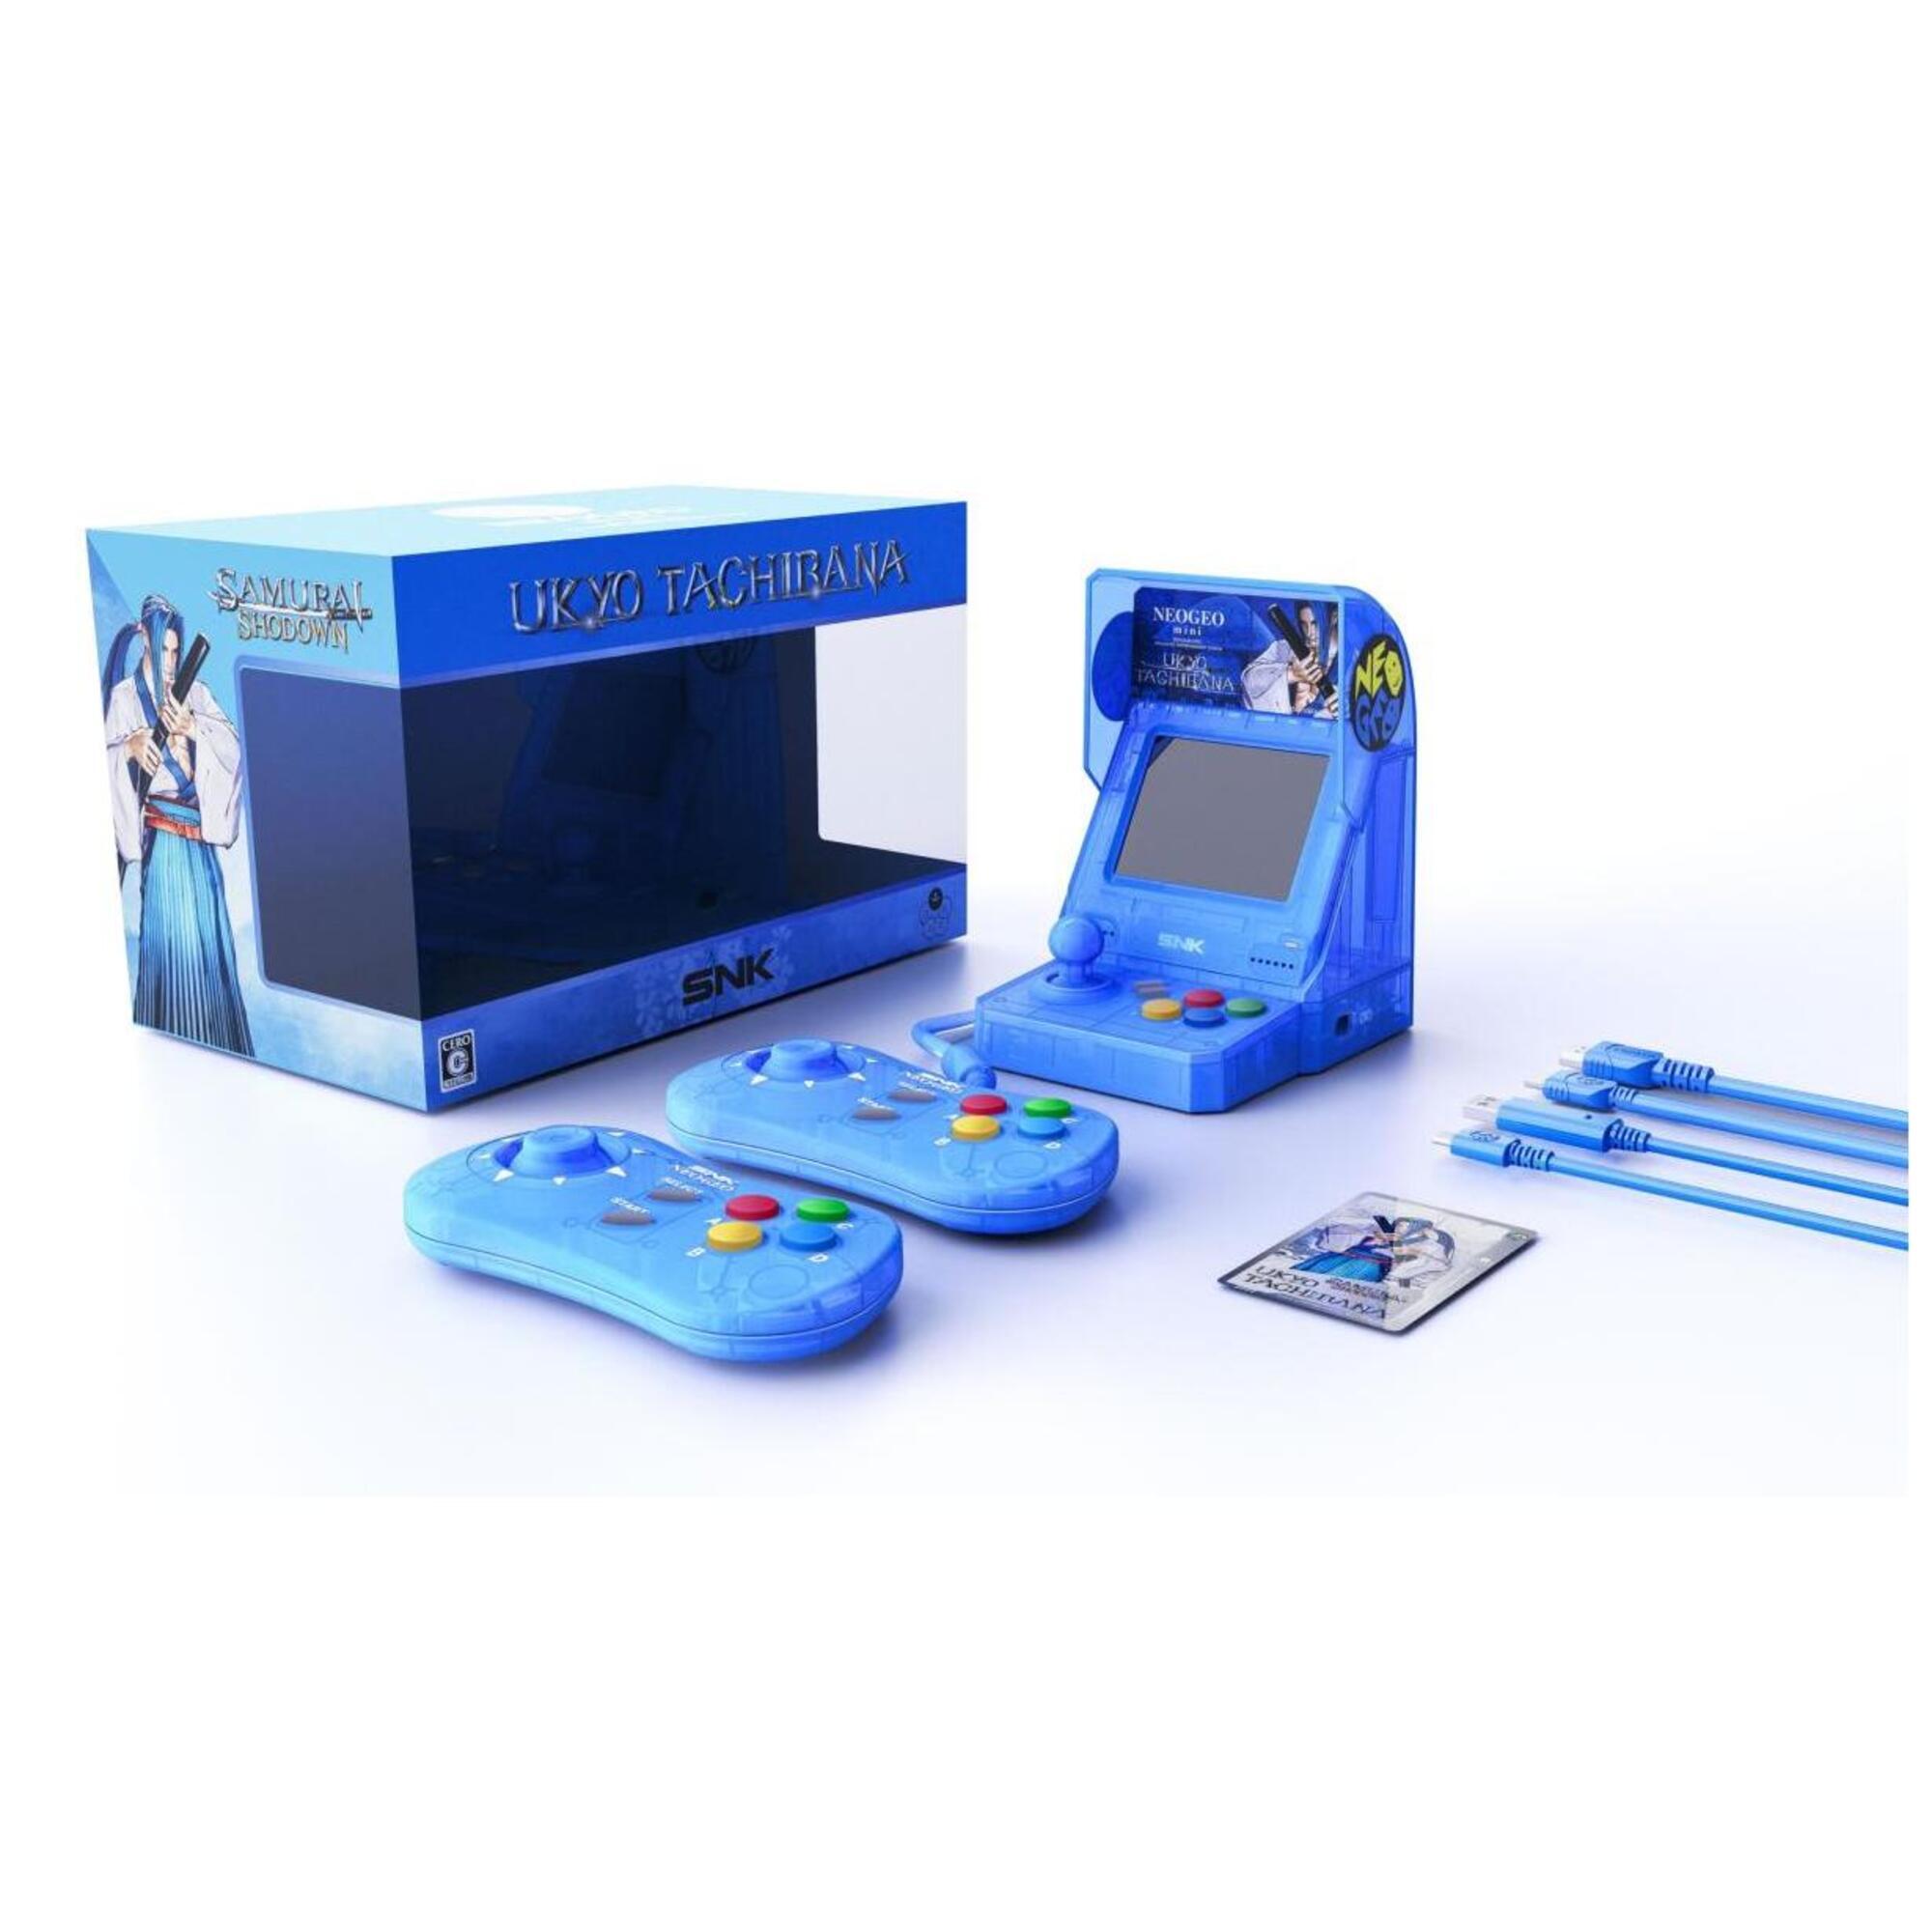 SNK Console SNK Neo Geo mini Samurai Shodown Limited Edition - Ukyo Tachibana (bleue) - Neuf